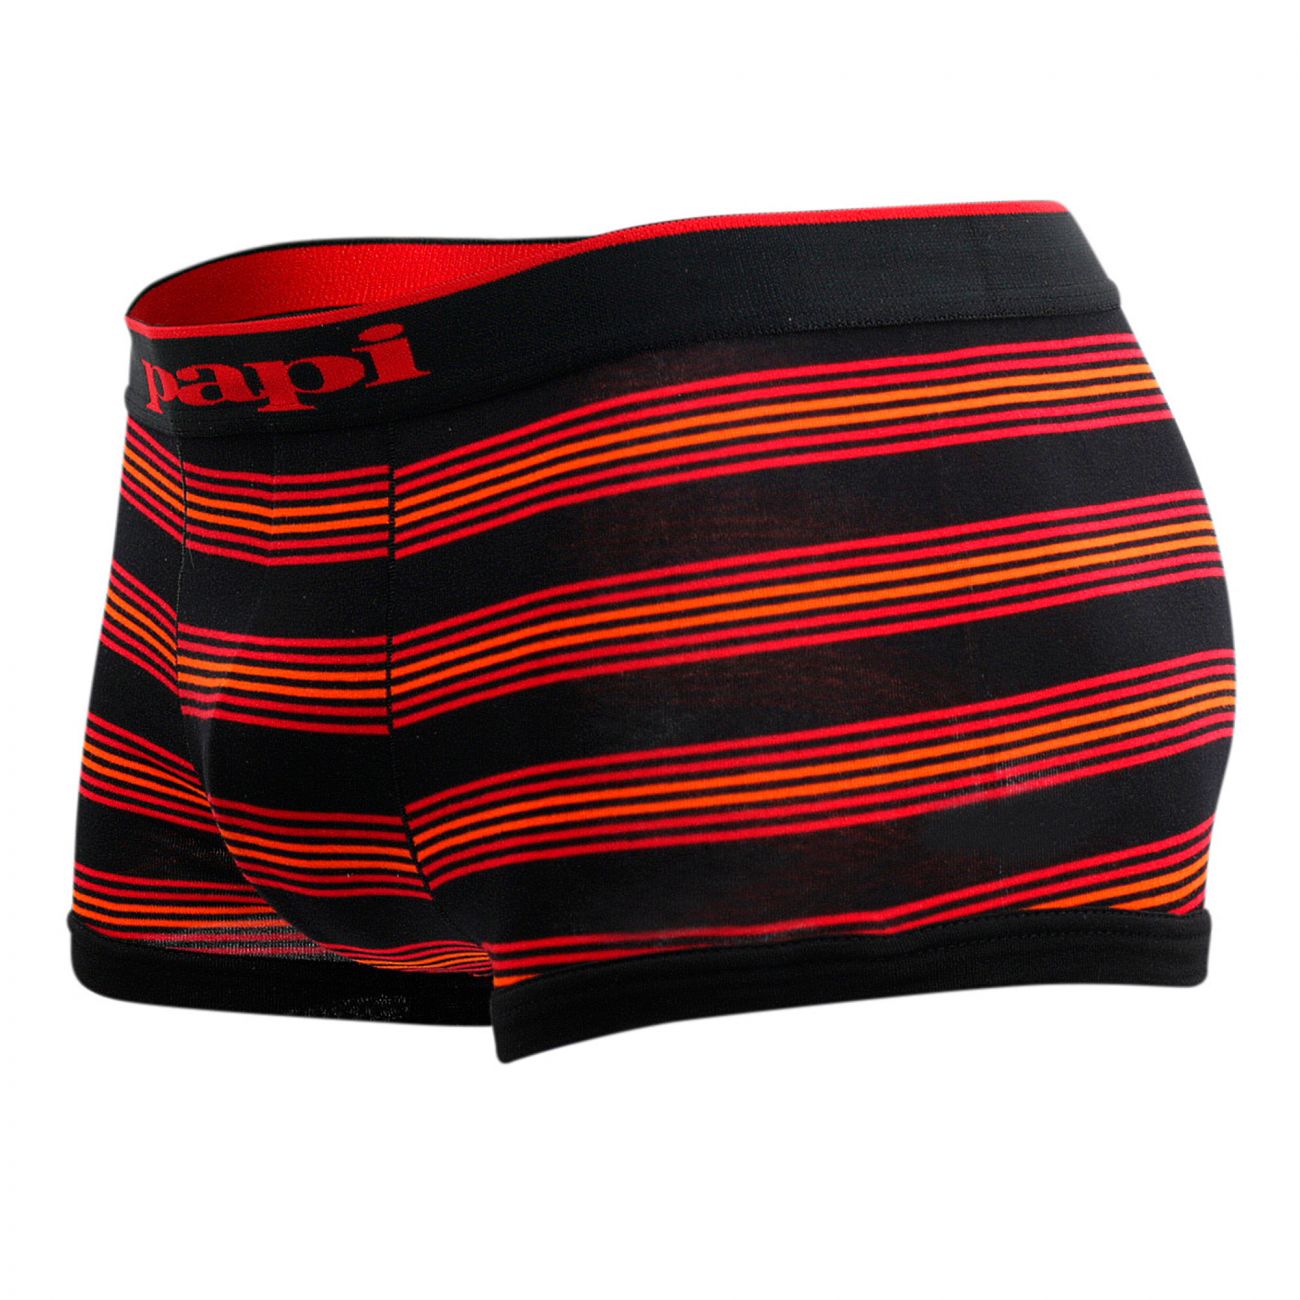 Papi 980503-982 Cotton Stretch Brazilian Yarndye Band Stripe Red Black